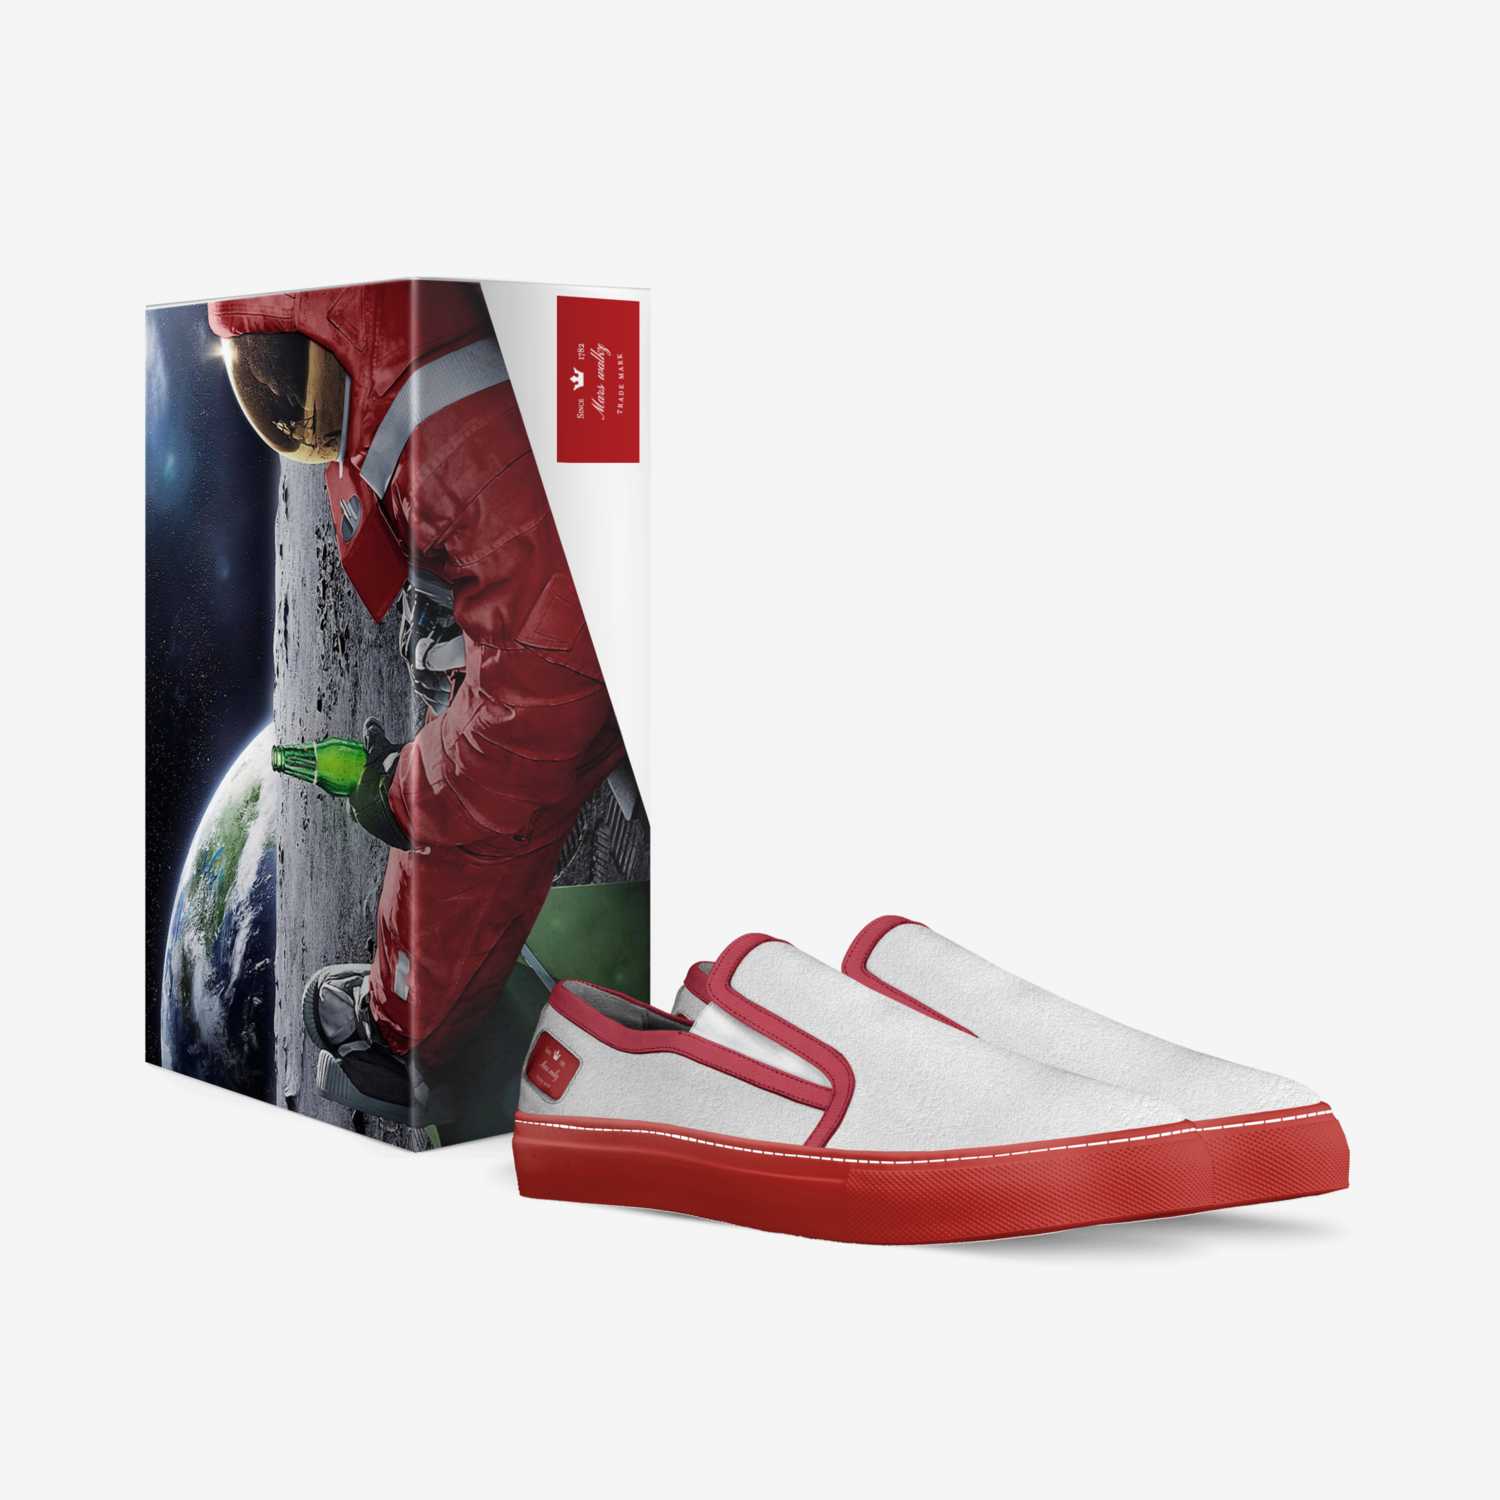 Mars walkz custom made in Italy shoes by Johnny Mccleod | Box view